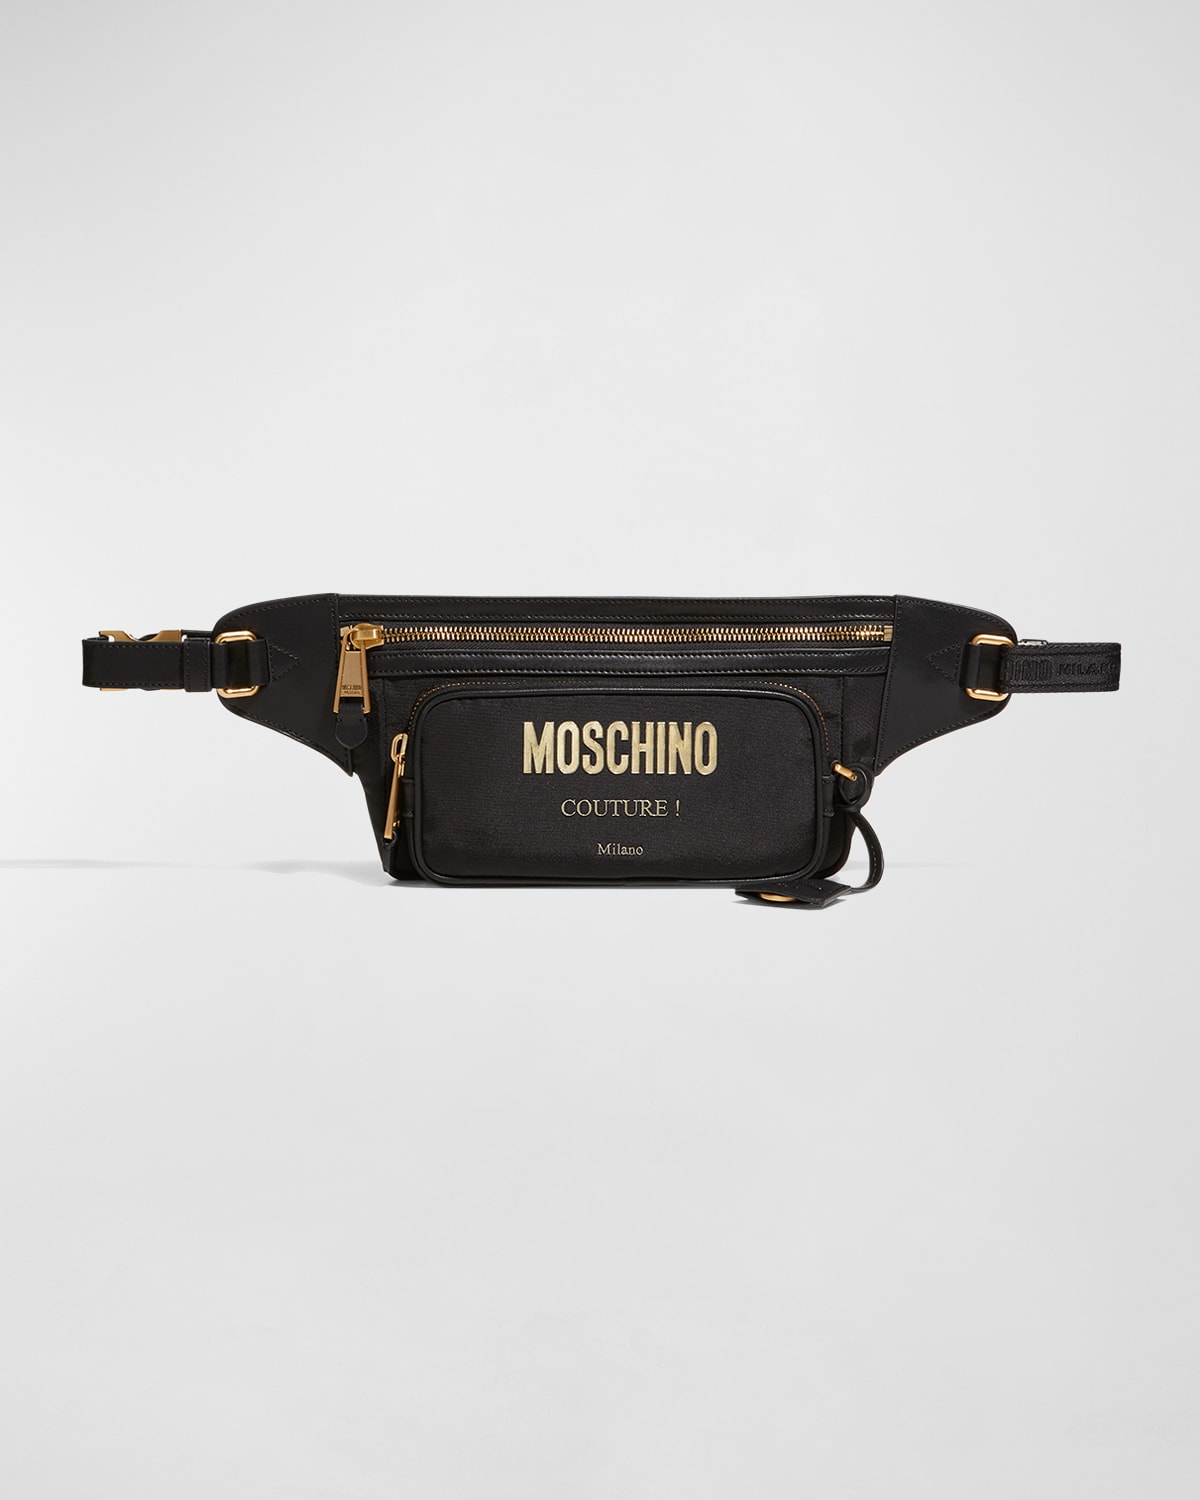 Moschino Men's Moschino Couture Cordura Nylon Waist Bag | Neiman Marcus